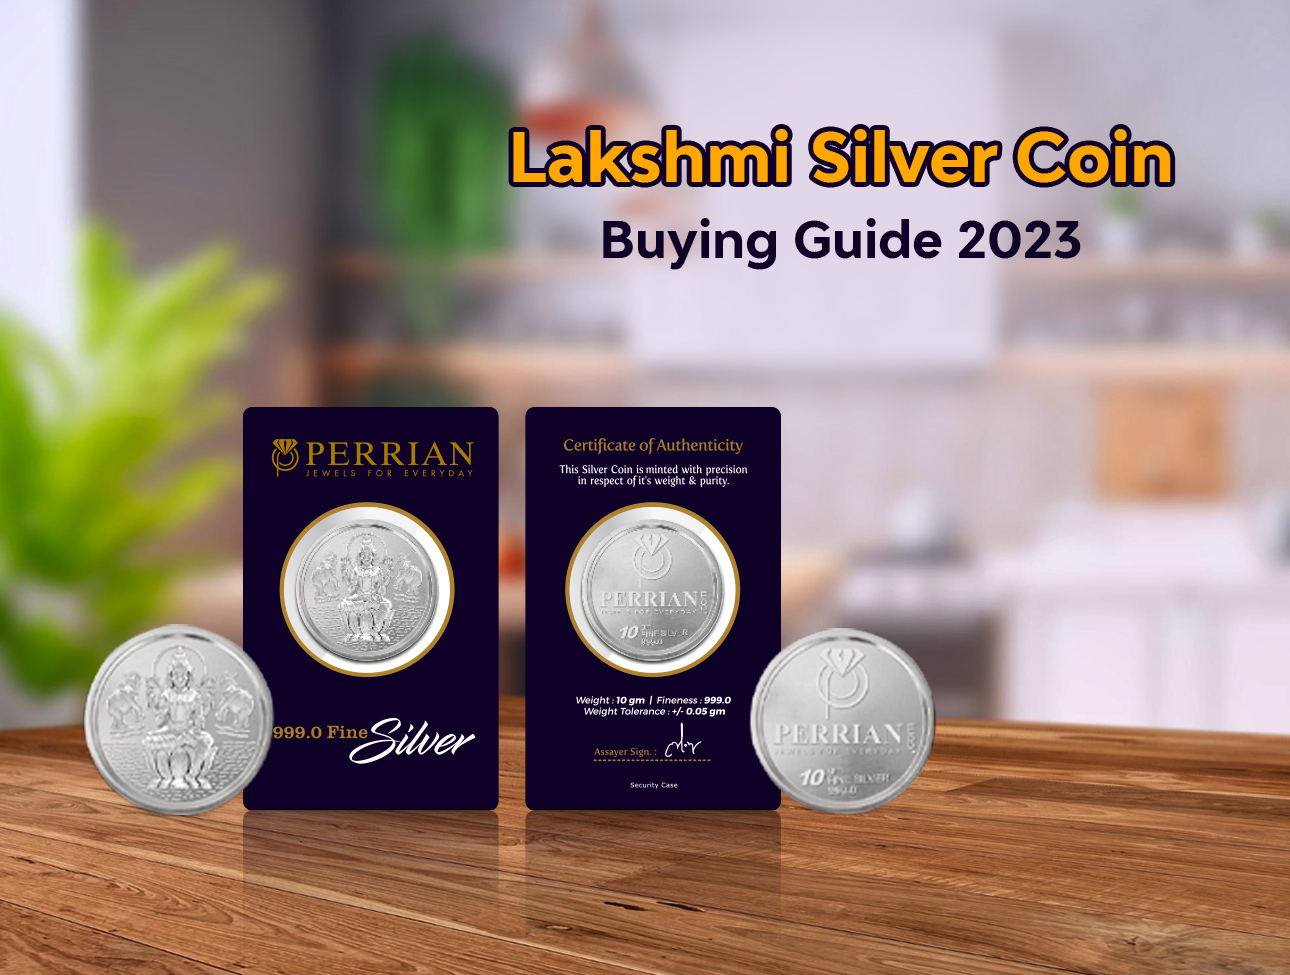 Lakshmi Silver Coin Buying Guide 2023